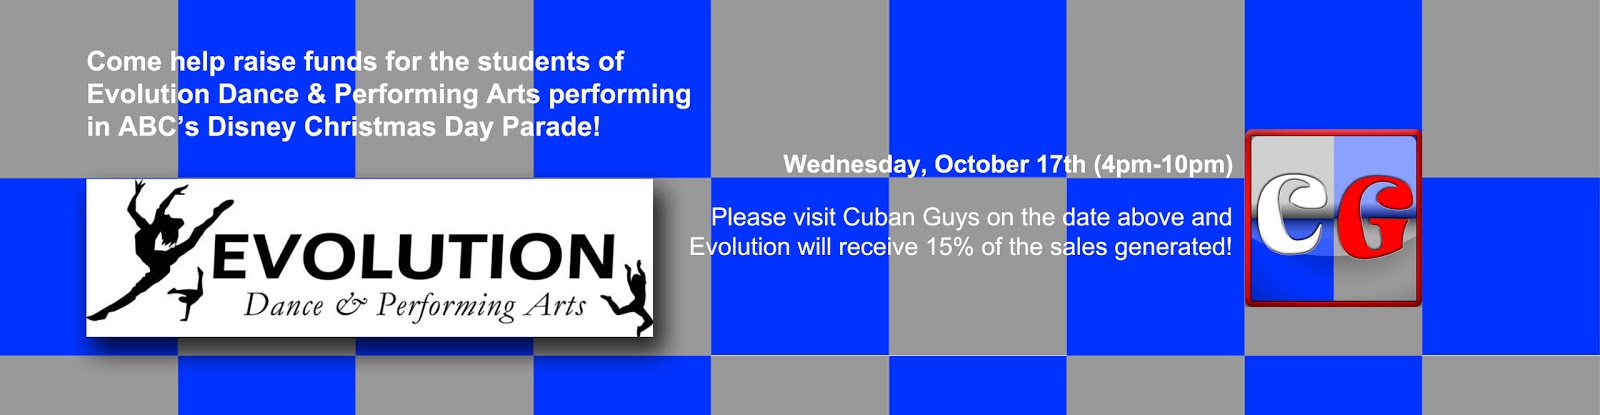 Cuban Guys Restaurant September 2012